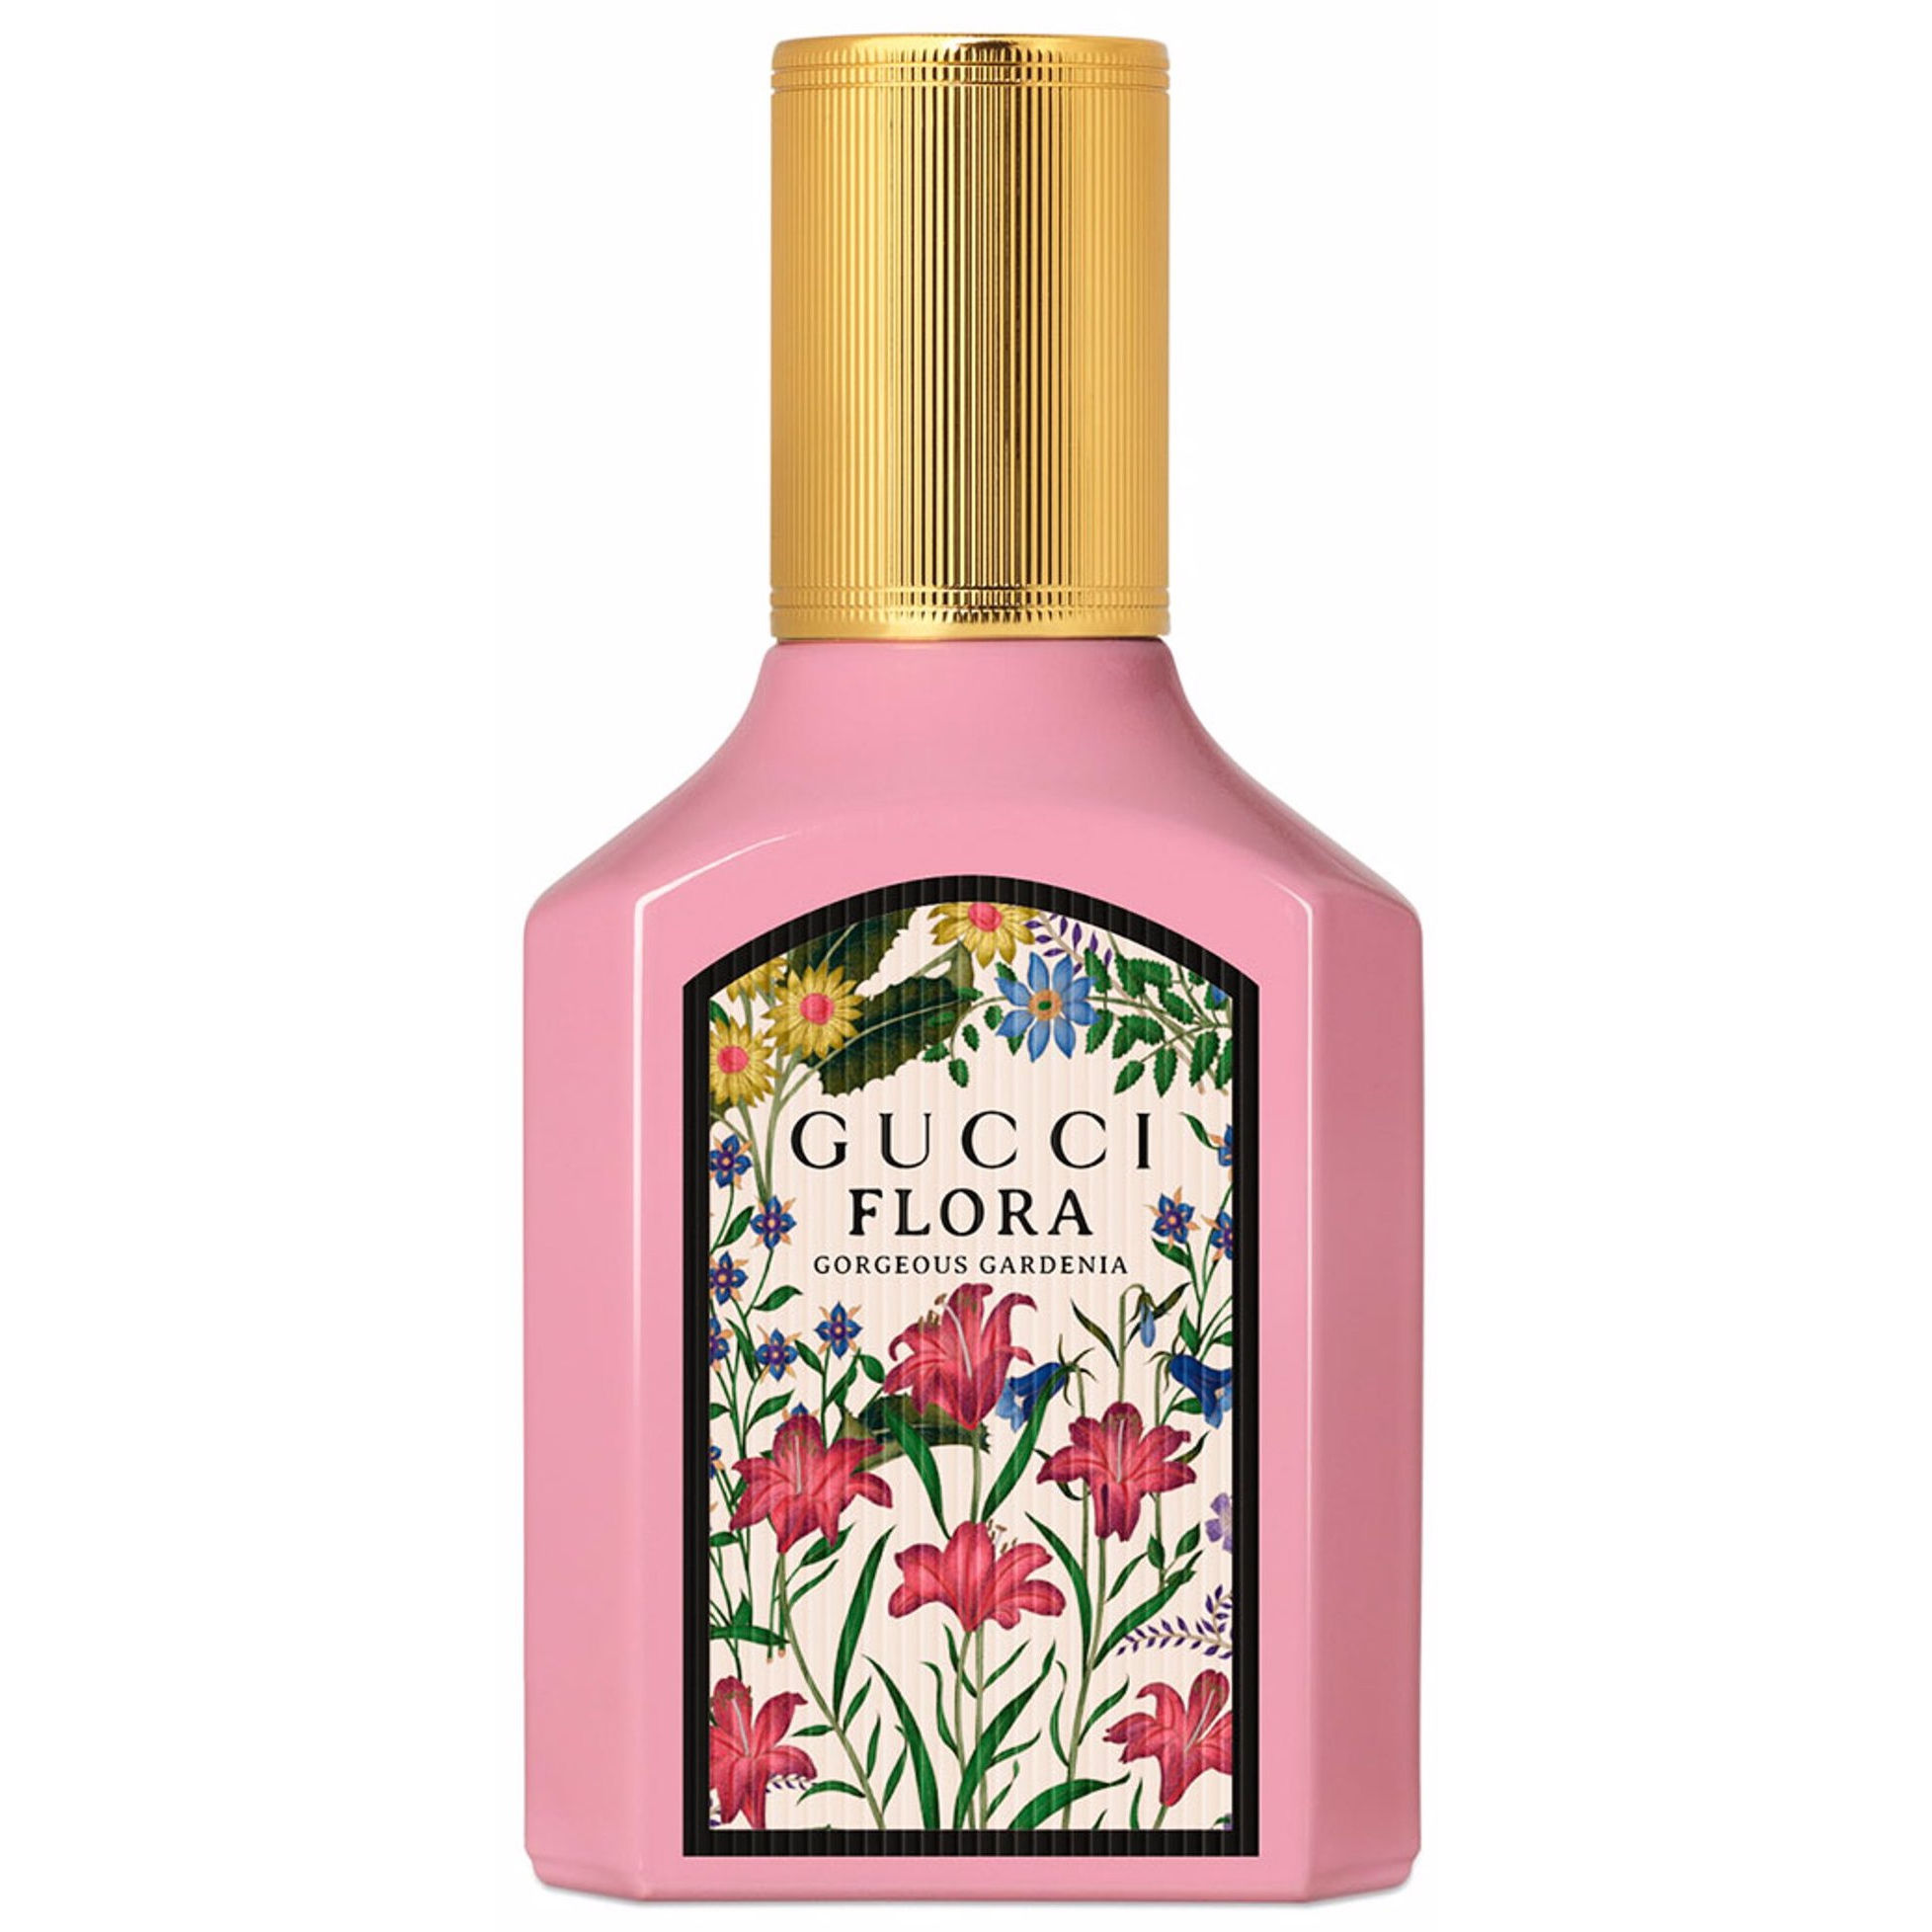 Gucci Flora Gorgeous Gardenia Eau de parfum spray 30 ml